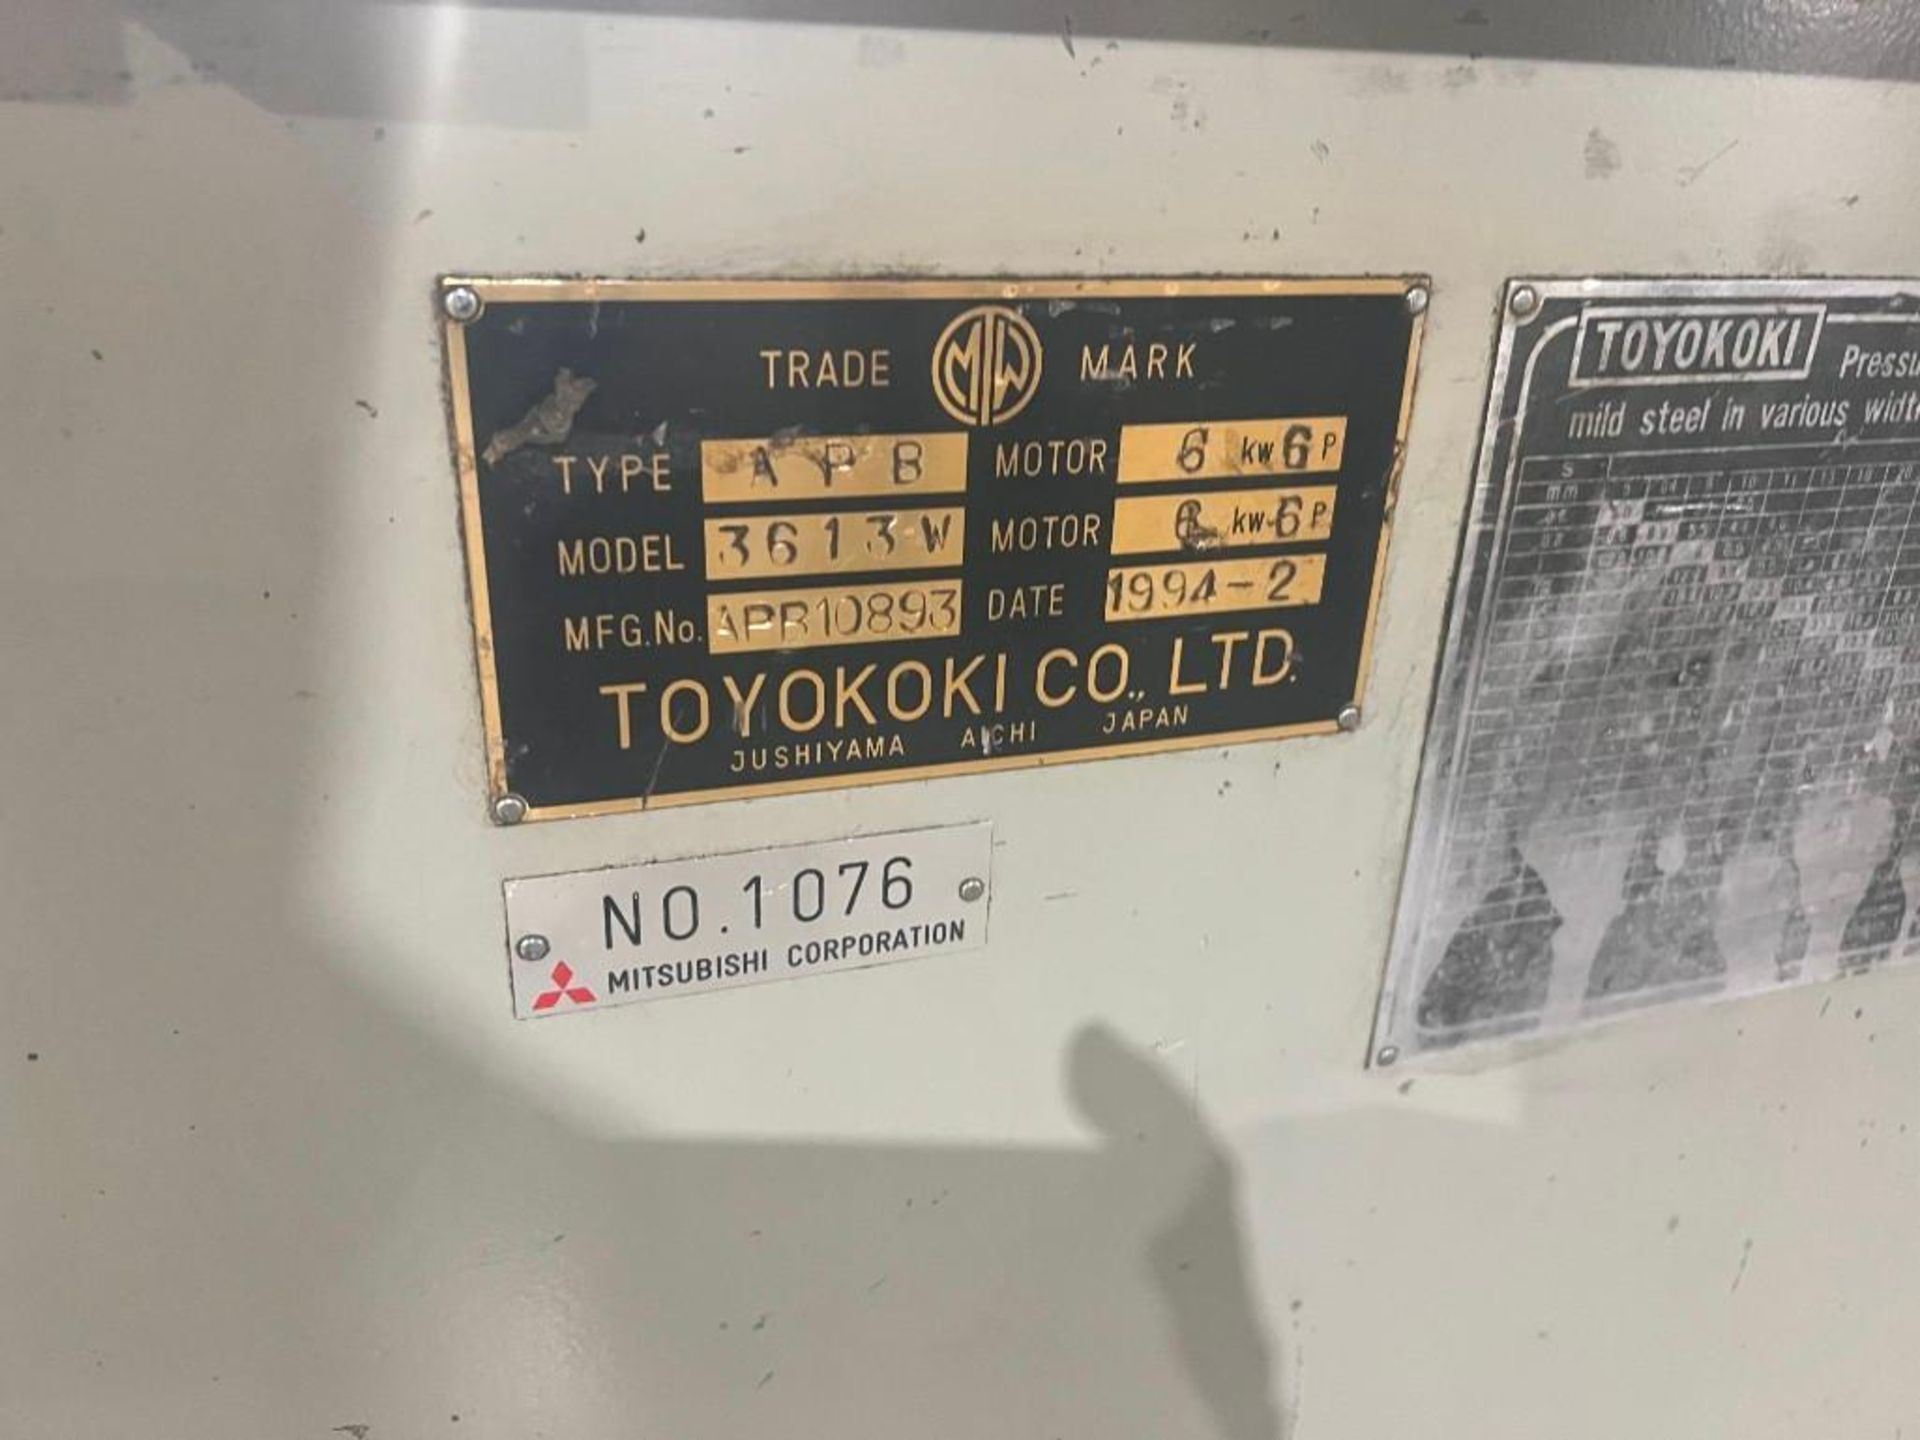 Toyokoki 3613W Press Brake - Image 4 of 9